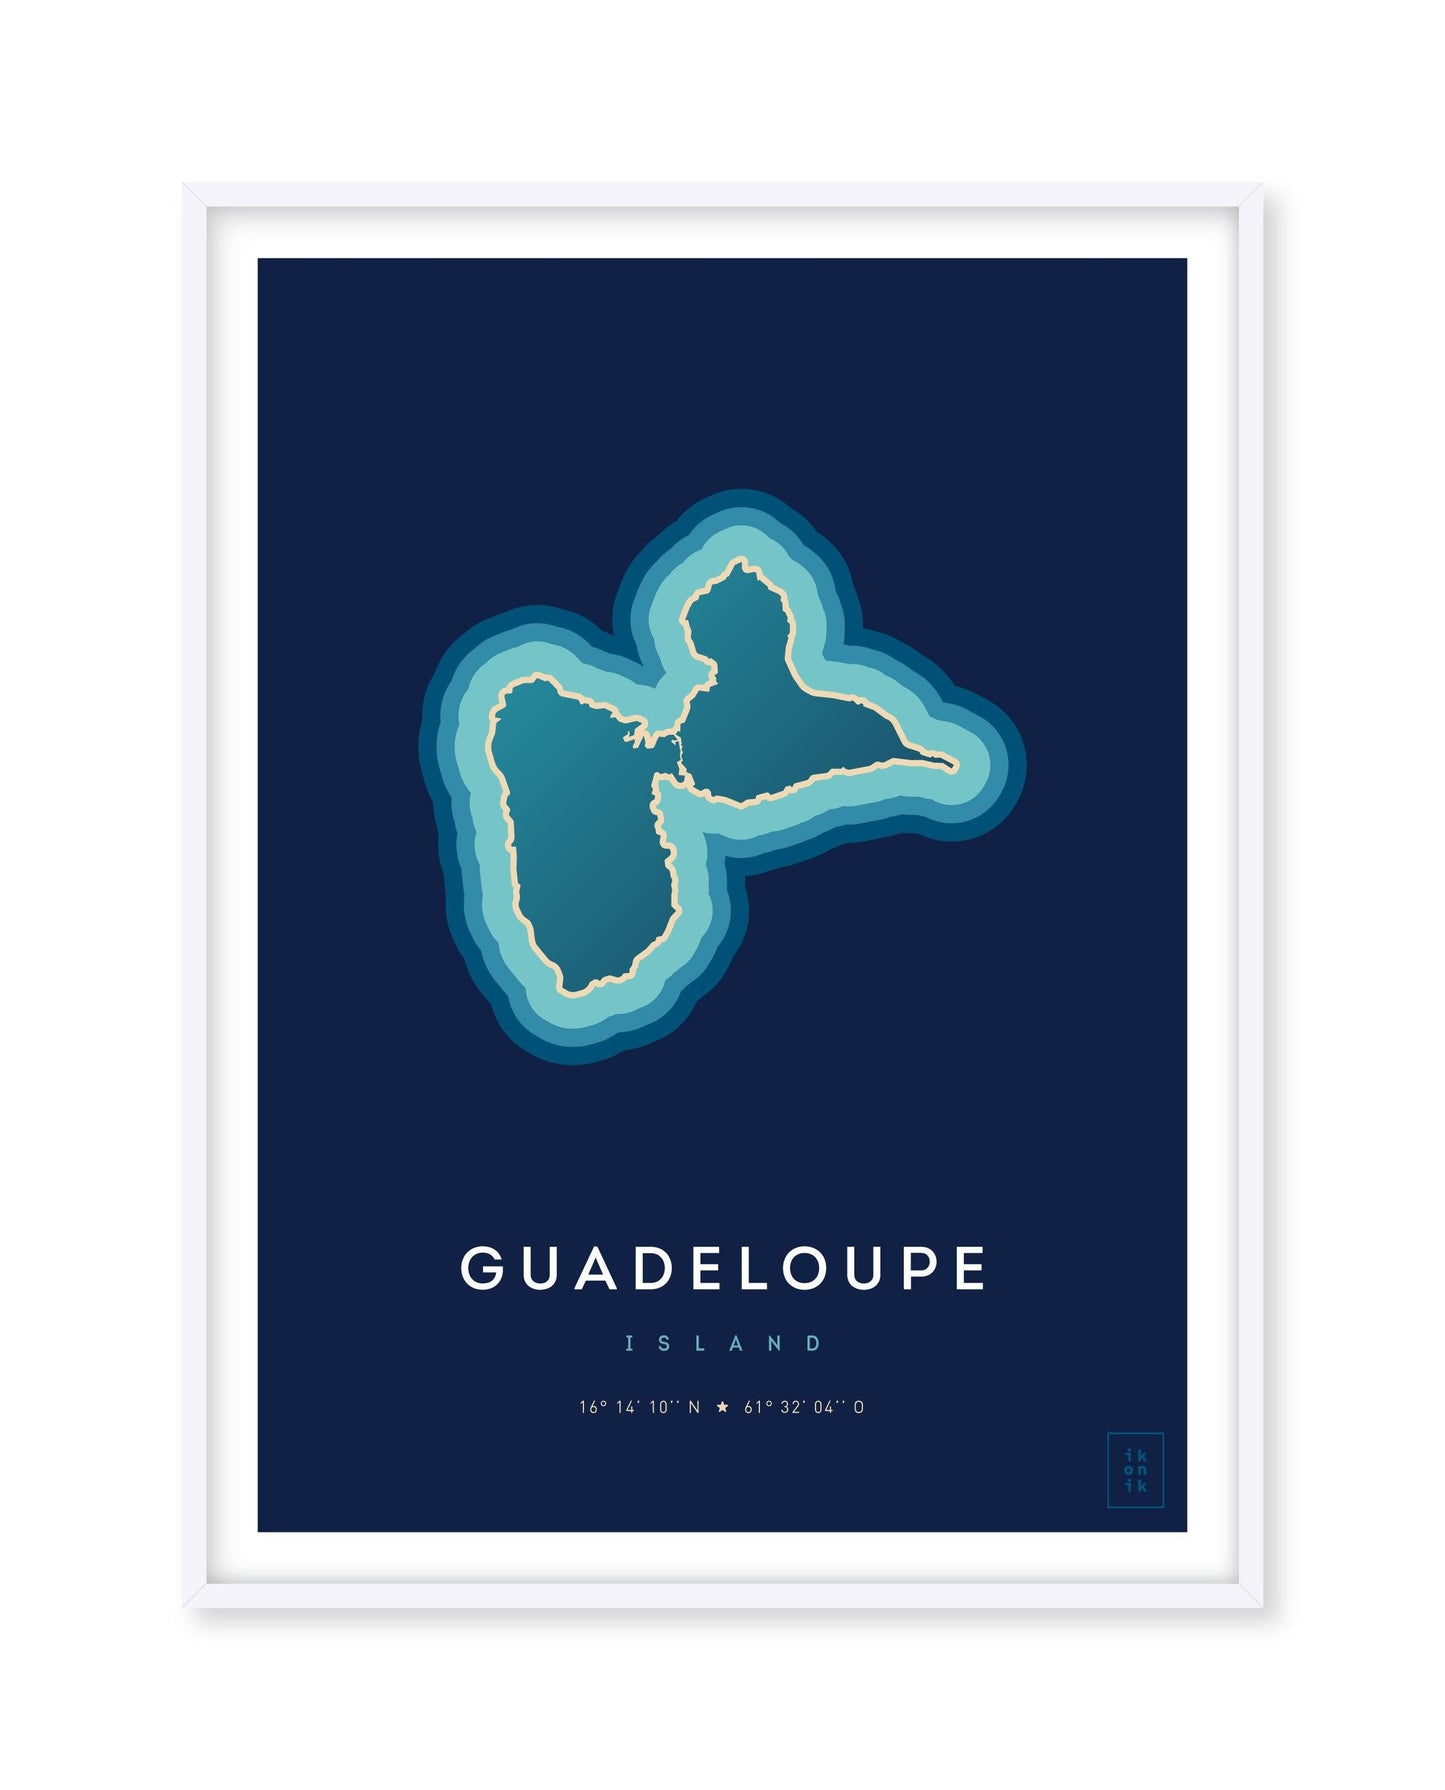 Guadeloupe island poster